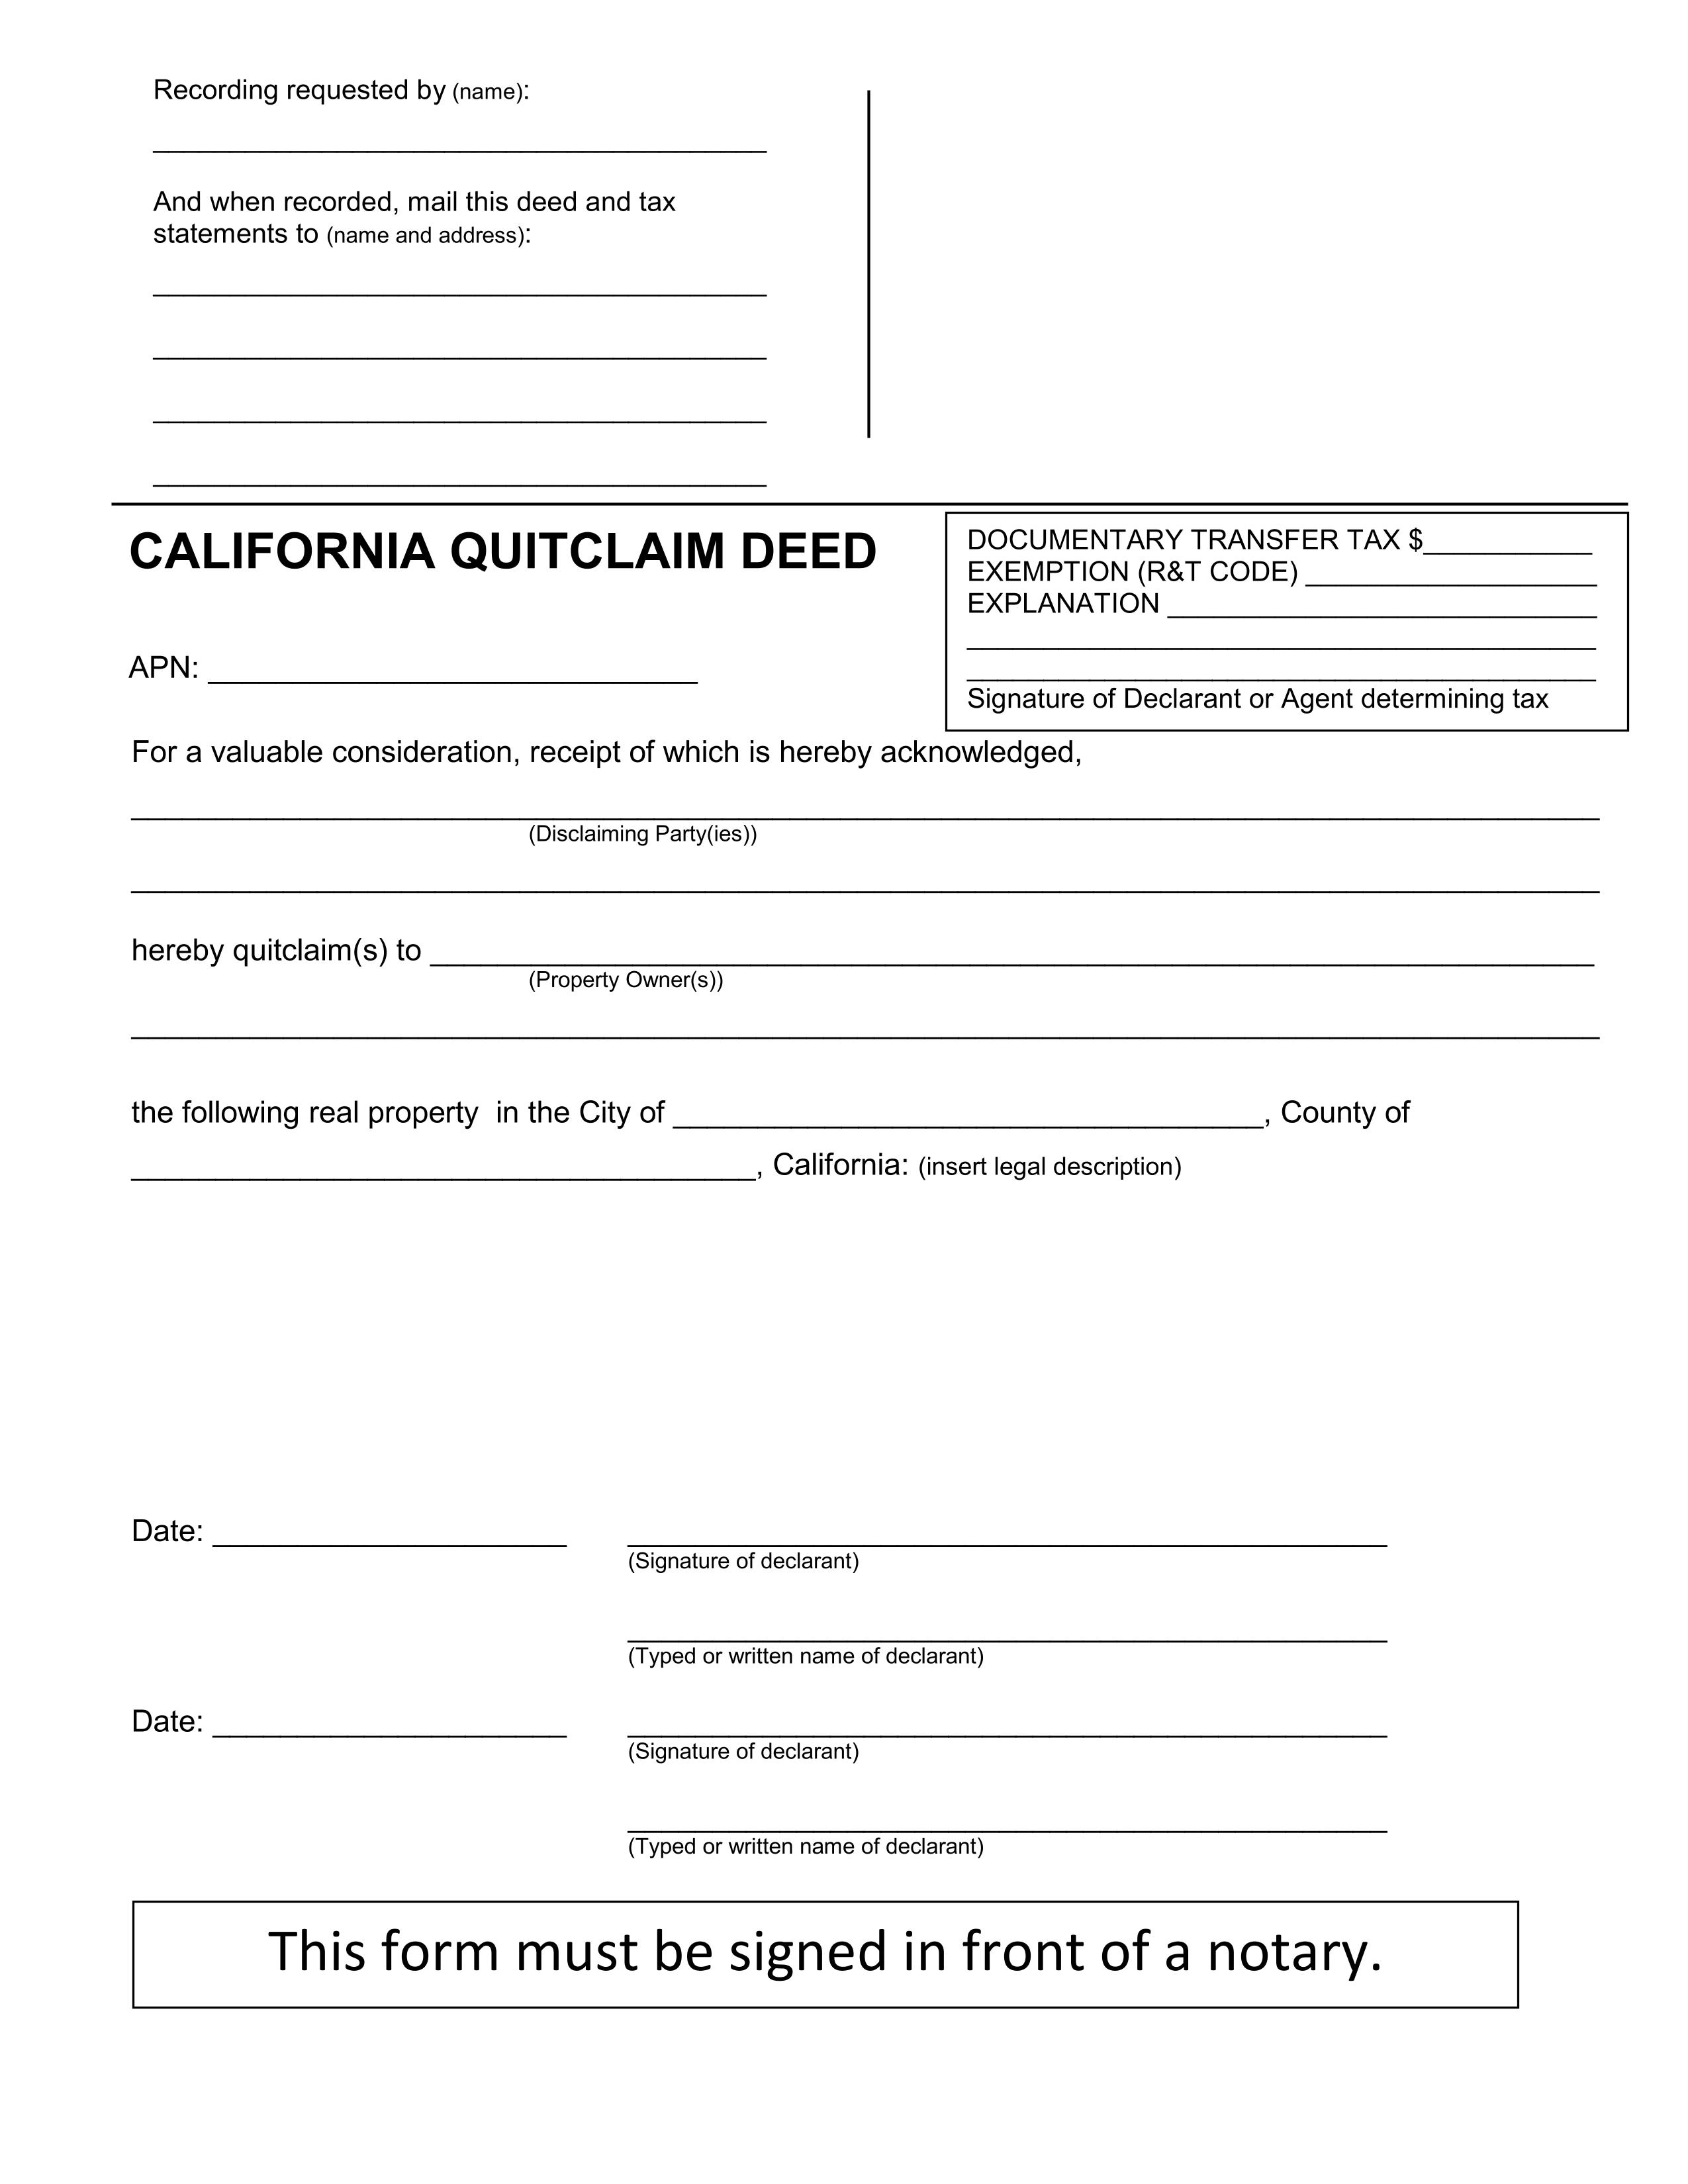 Quit Claim Deed Form of California